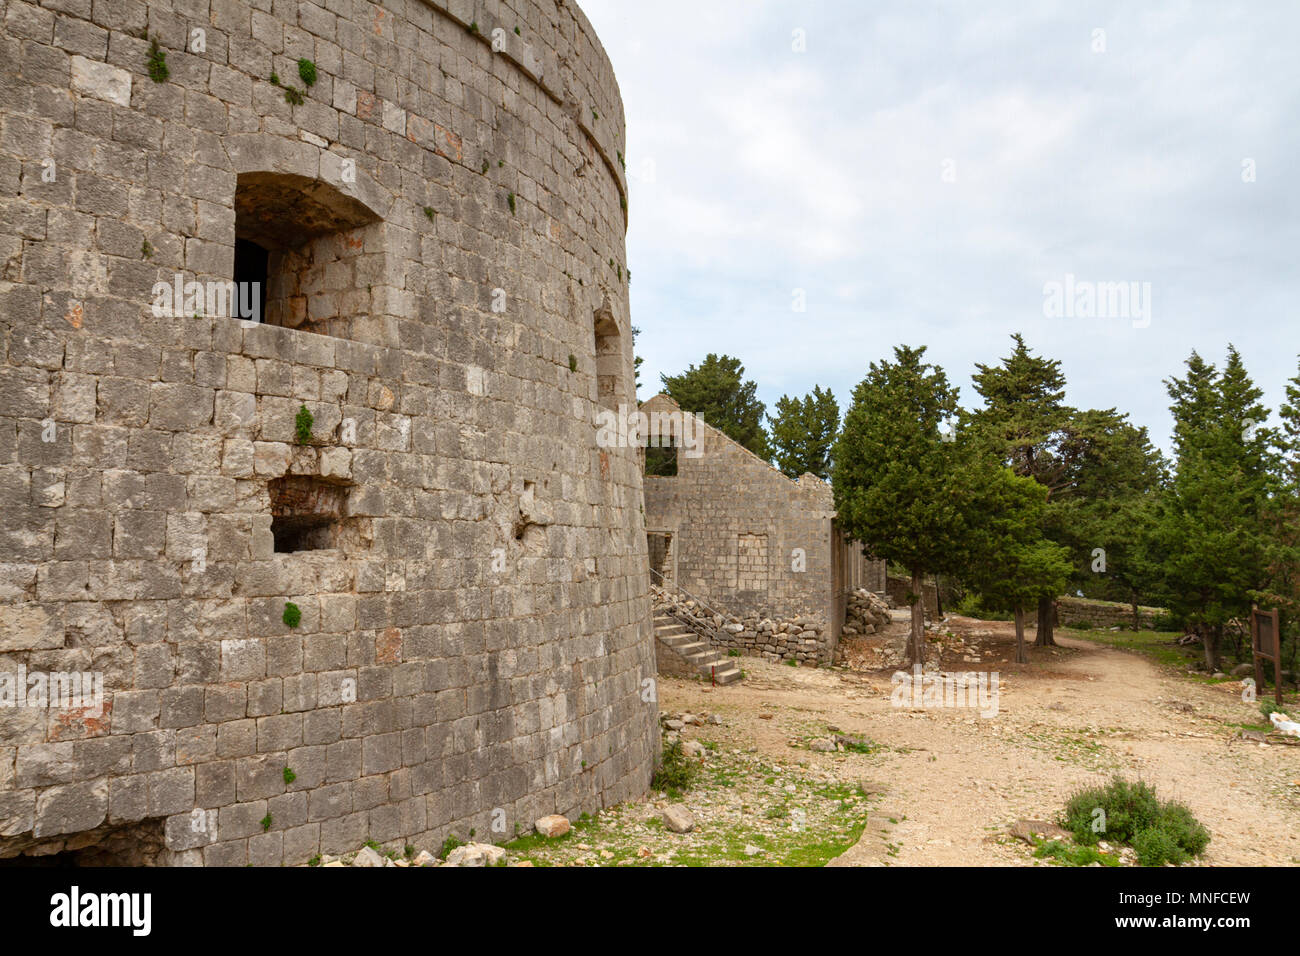 The ruins of Fort Royal on Lokrum Island, in the Adriatic Sea off Dubrovnik, Croatia. Stock Photo